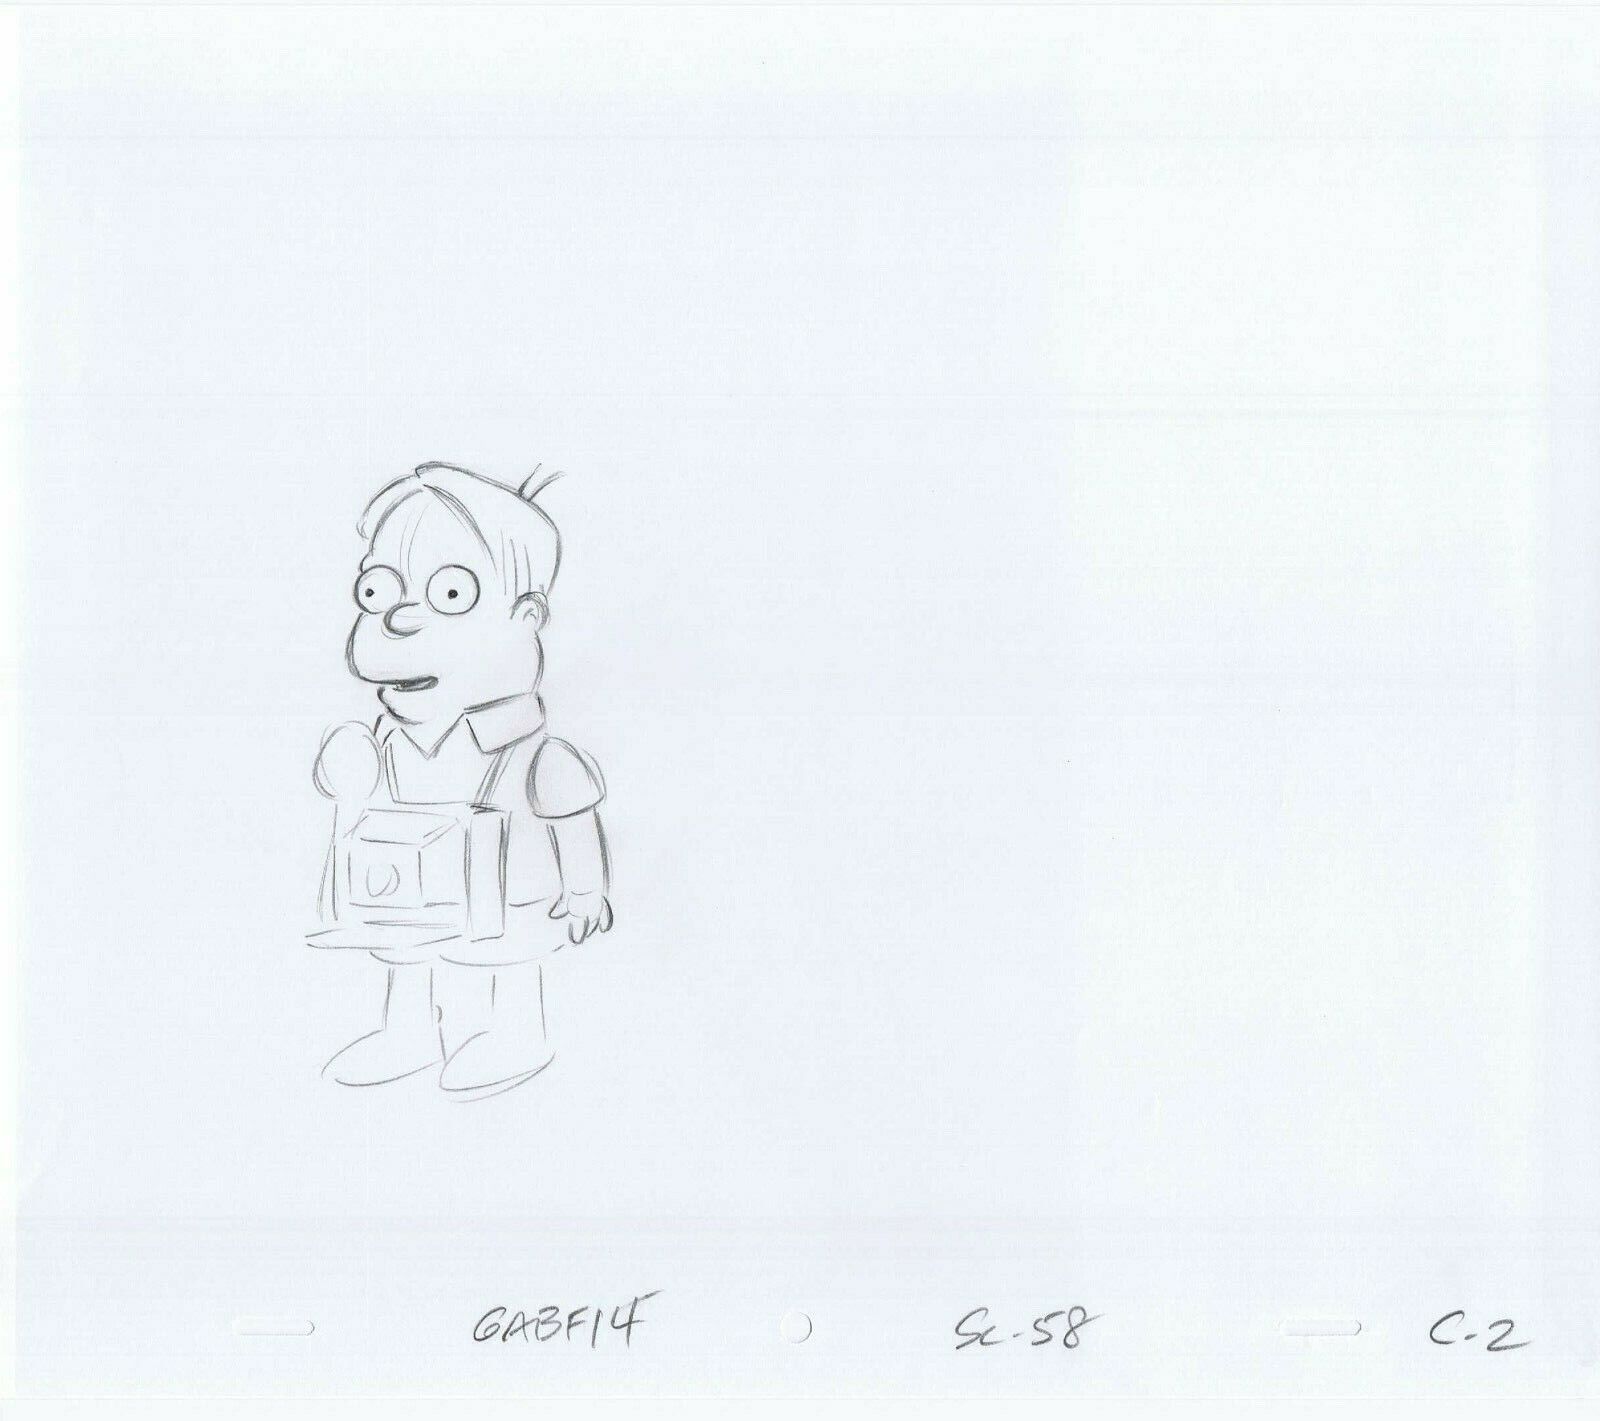 Simpsons Martin Original Art Animation Production Pencils GABF14 SC*58 C-2